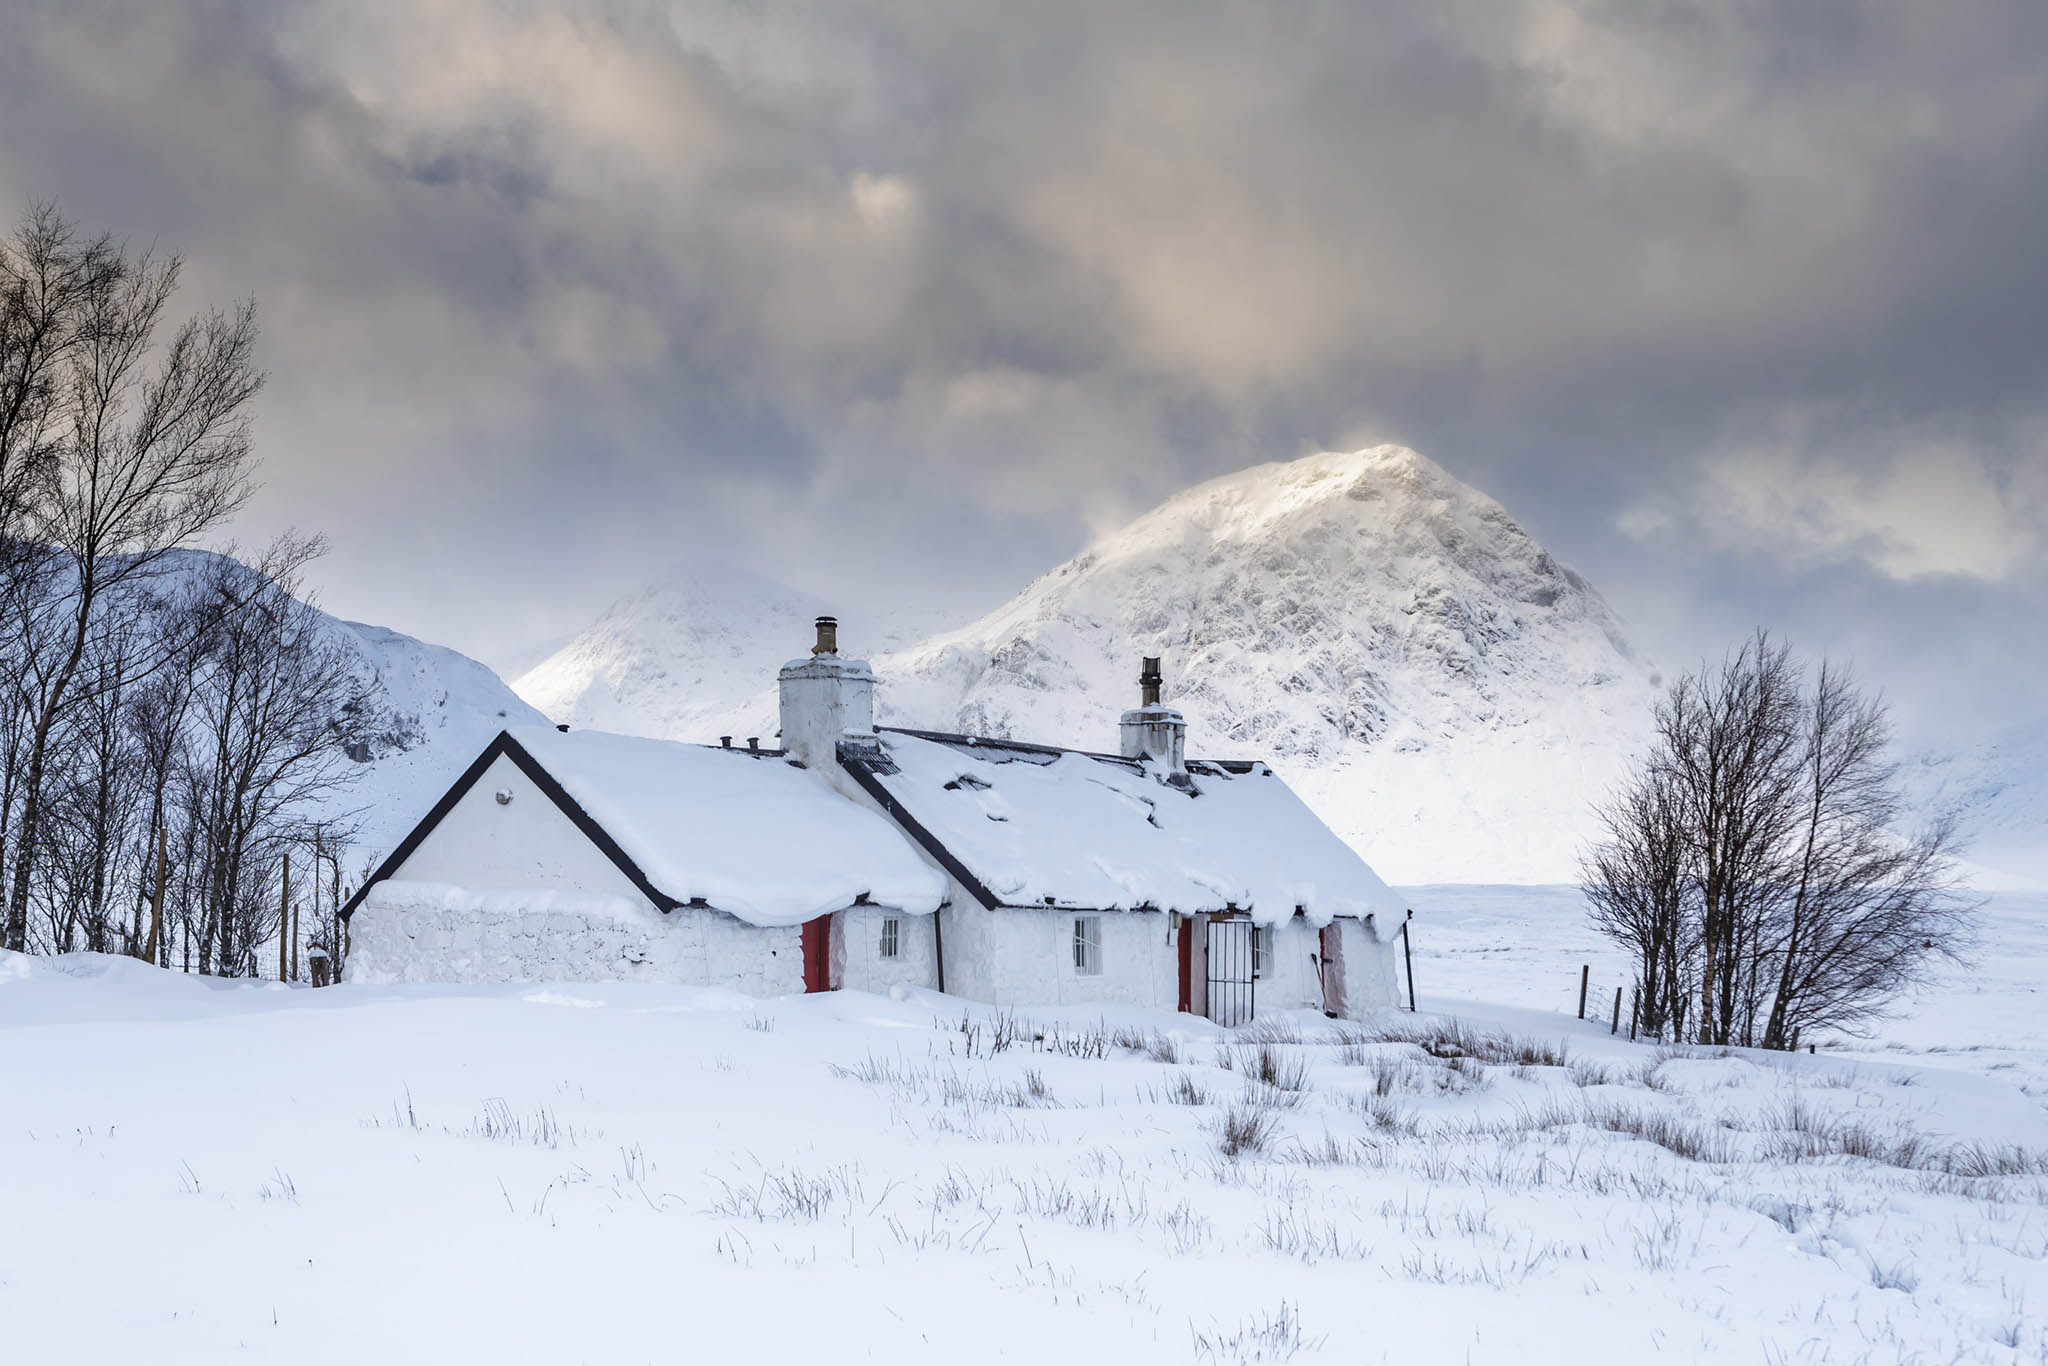 Black Rock Cottage in winter snow, Glencoe, Scotland - Glencoe photography tour and workshop.